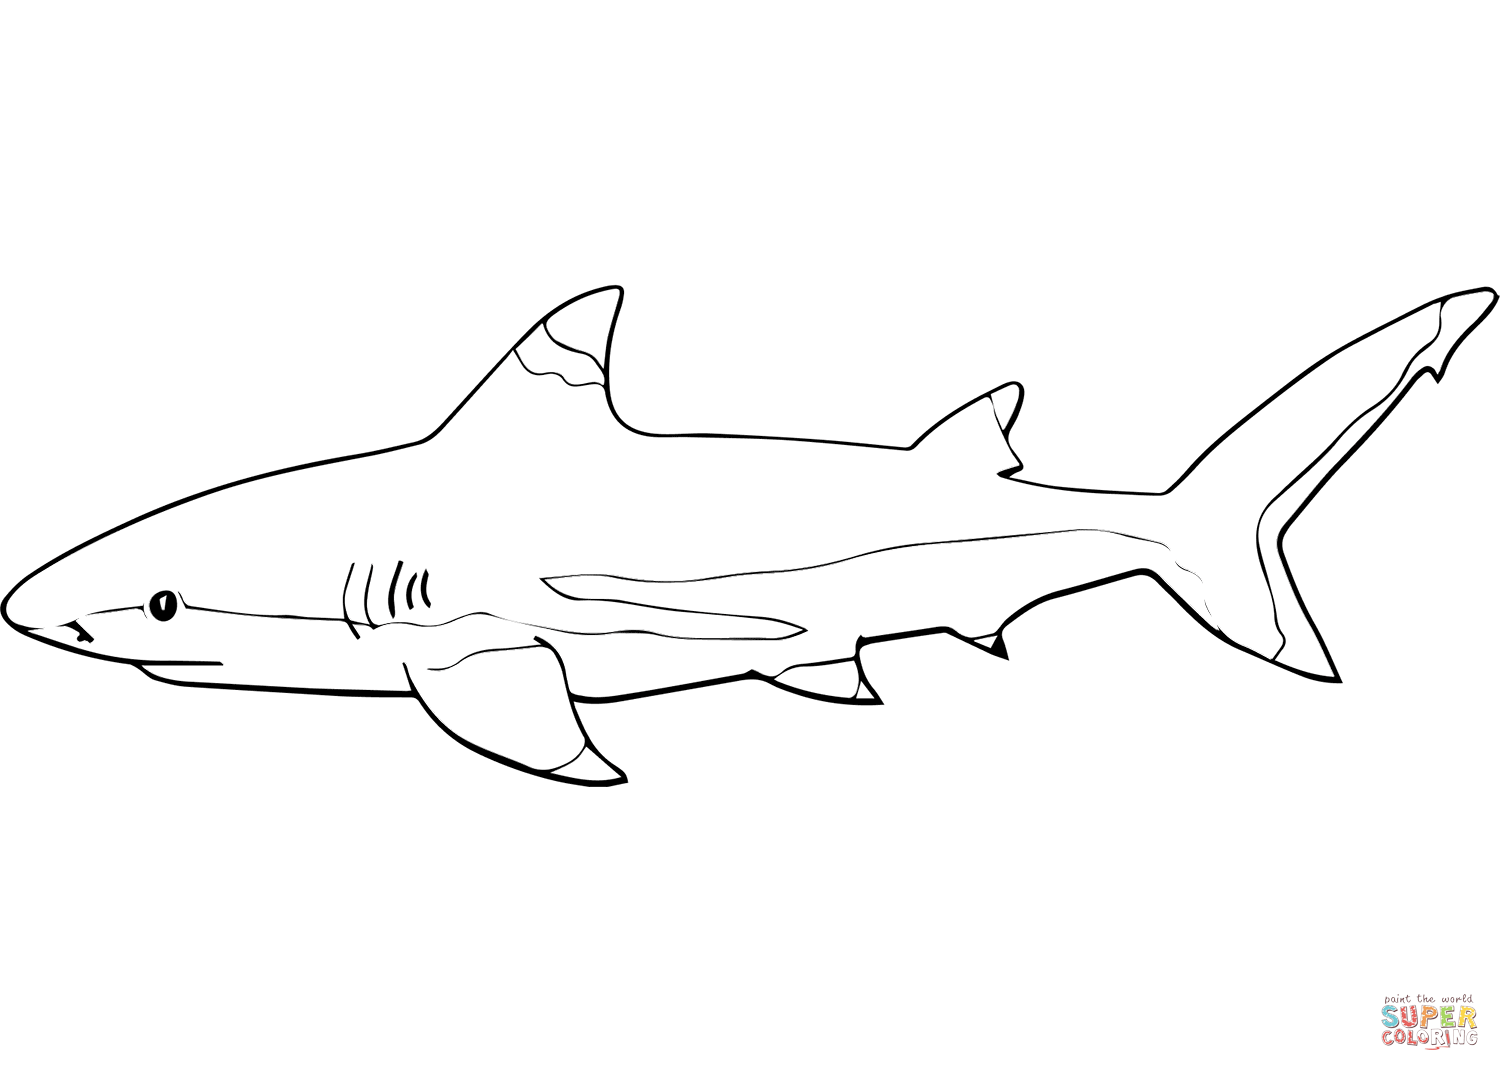 Dibujo de tiburãn de arrecife de punta negra para colorear dibujos para colorear imprimir gratis